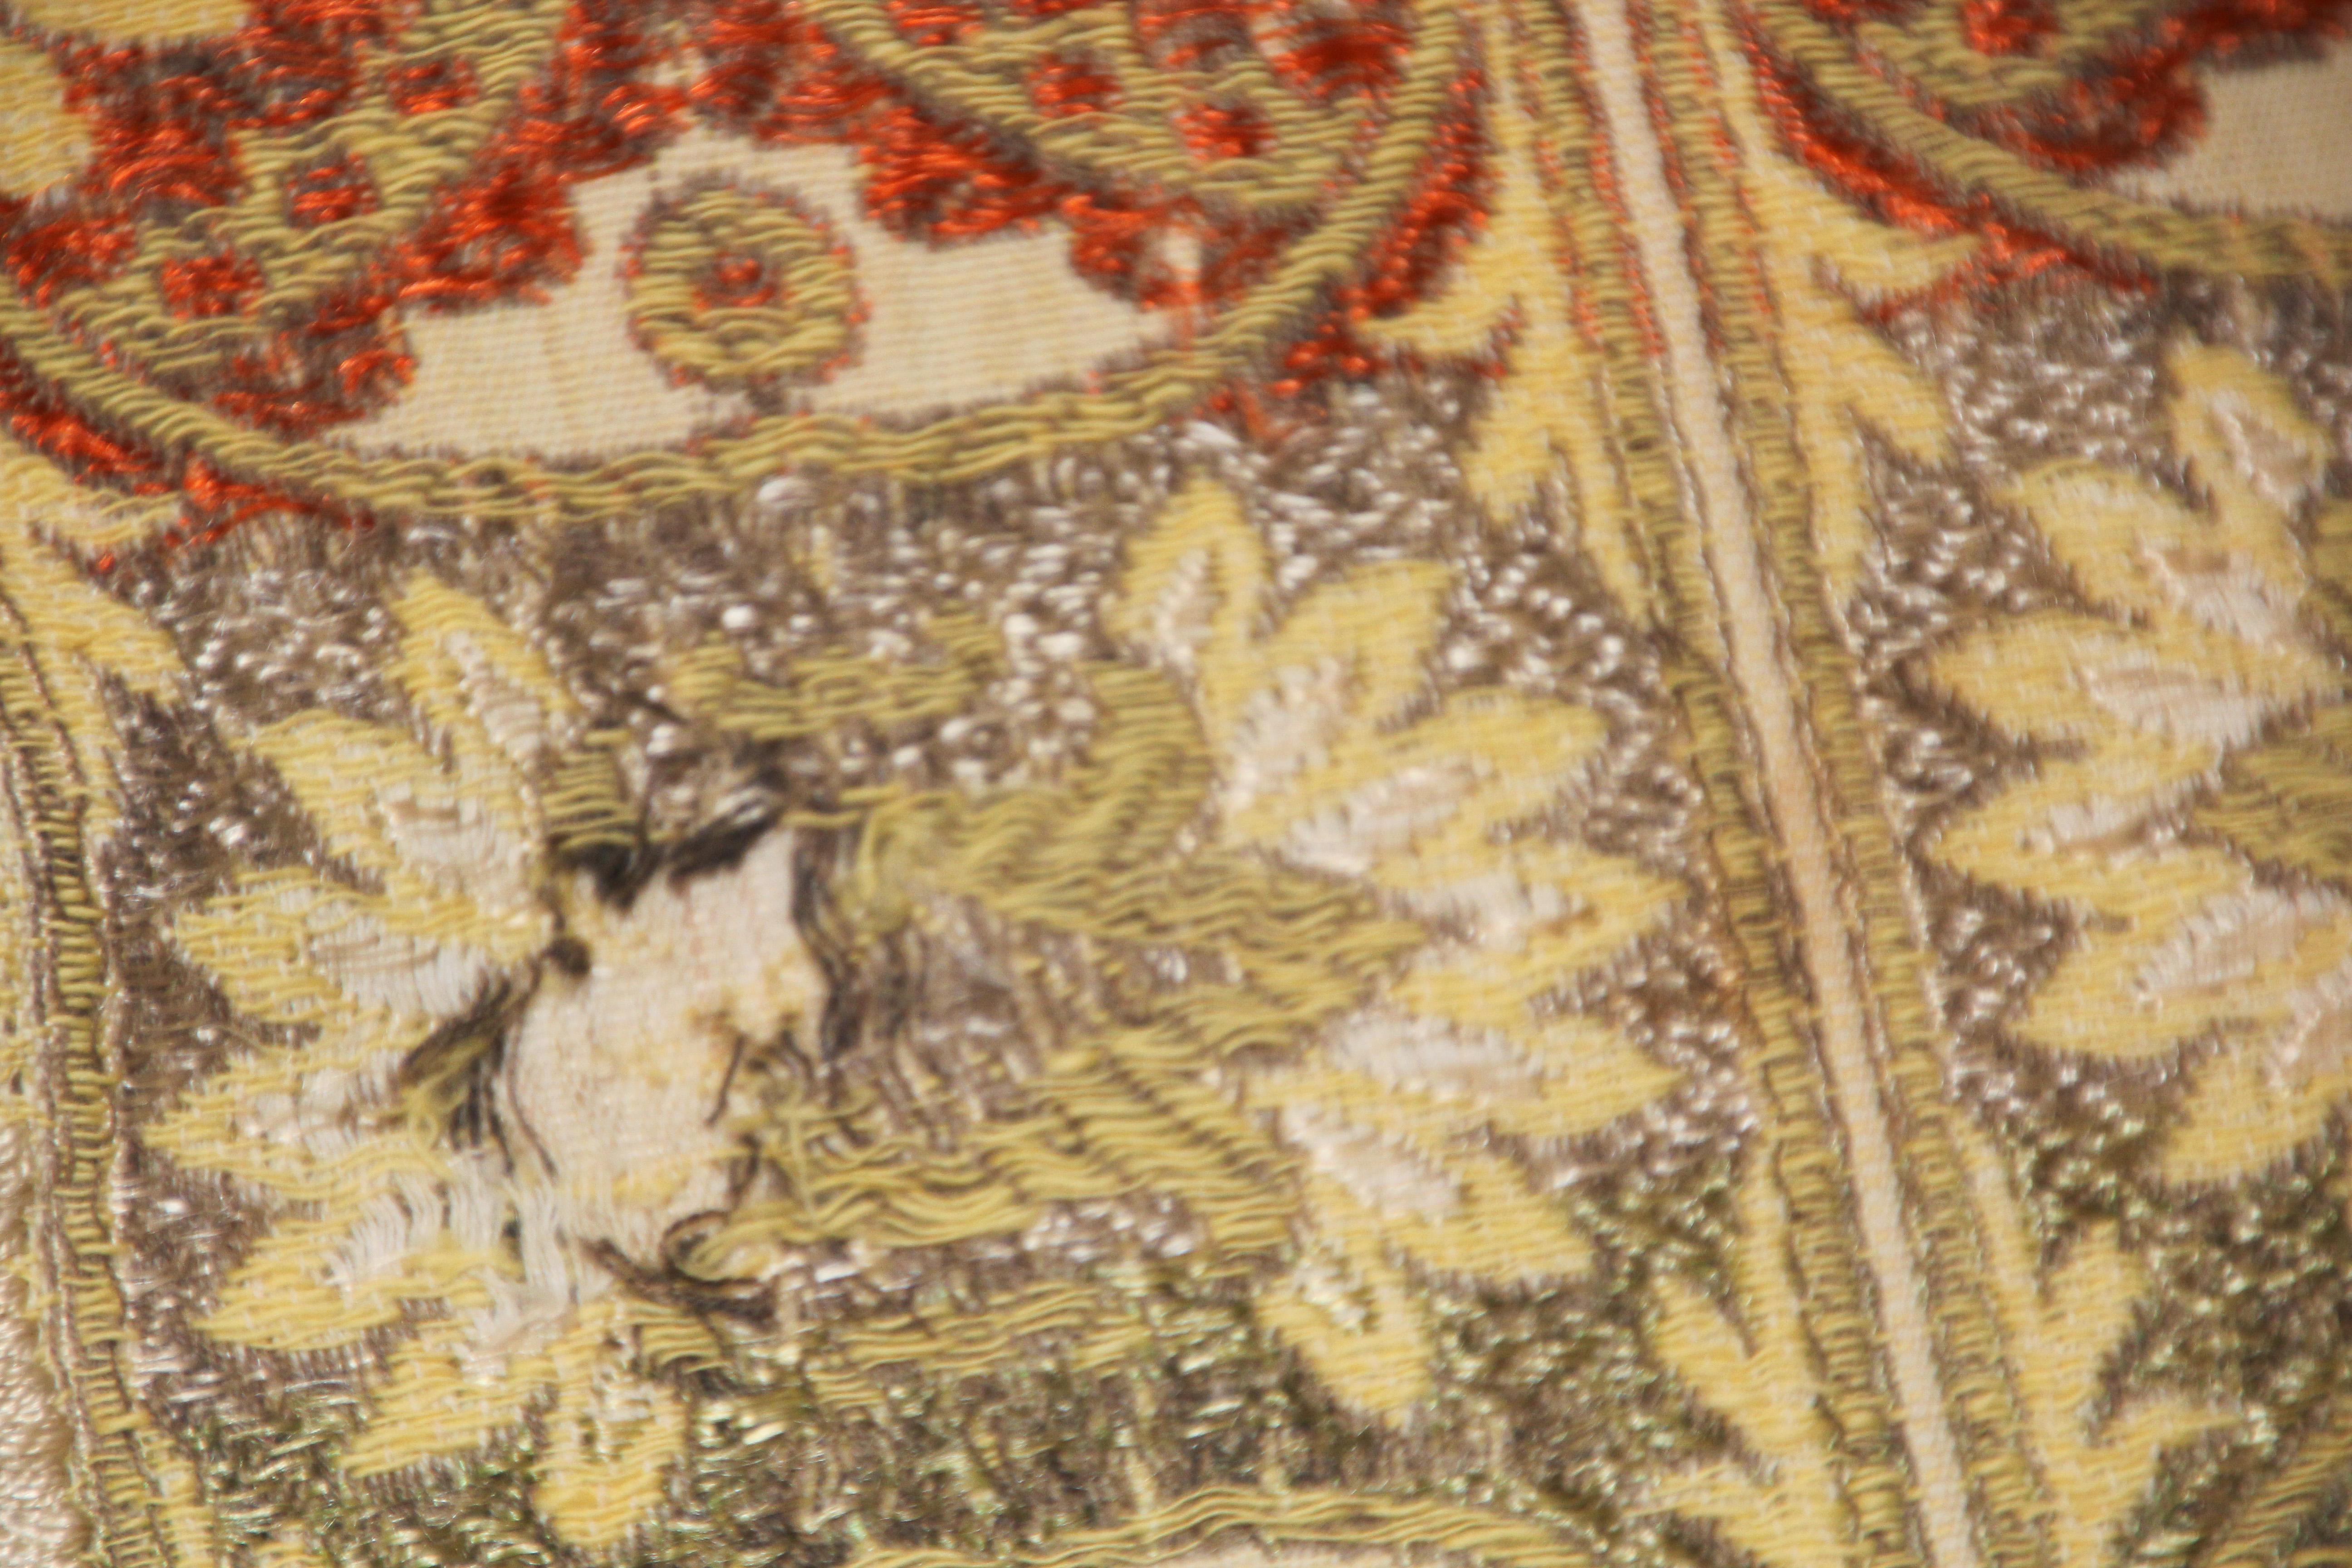 Antique Granada Moorish Textile with Arabic Calligraphy Writing 5